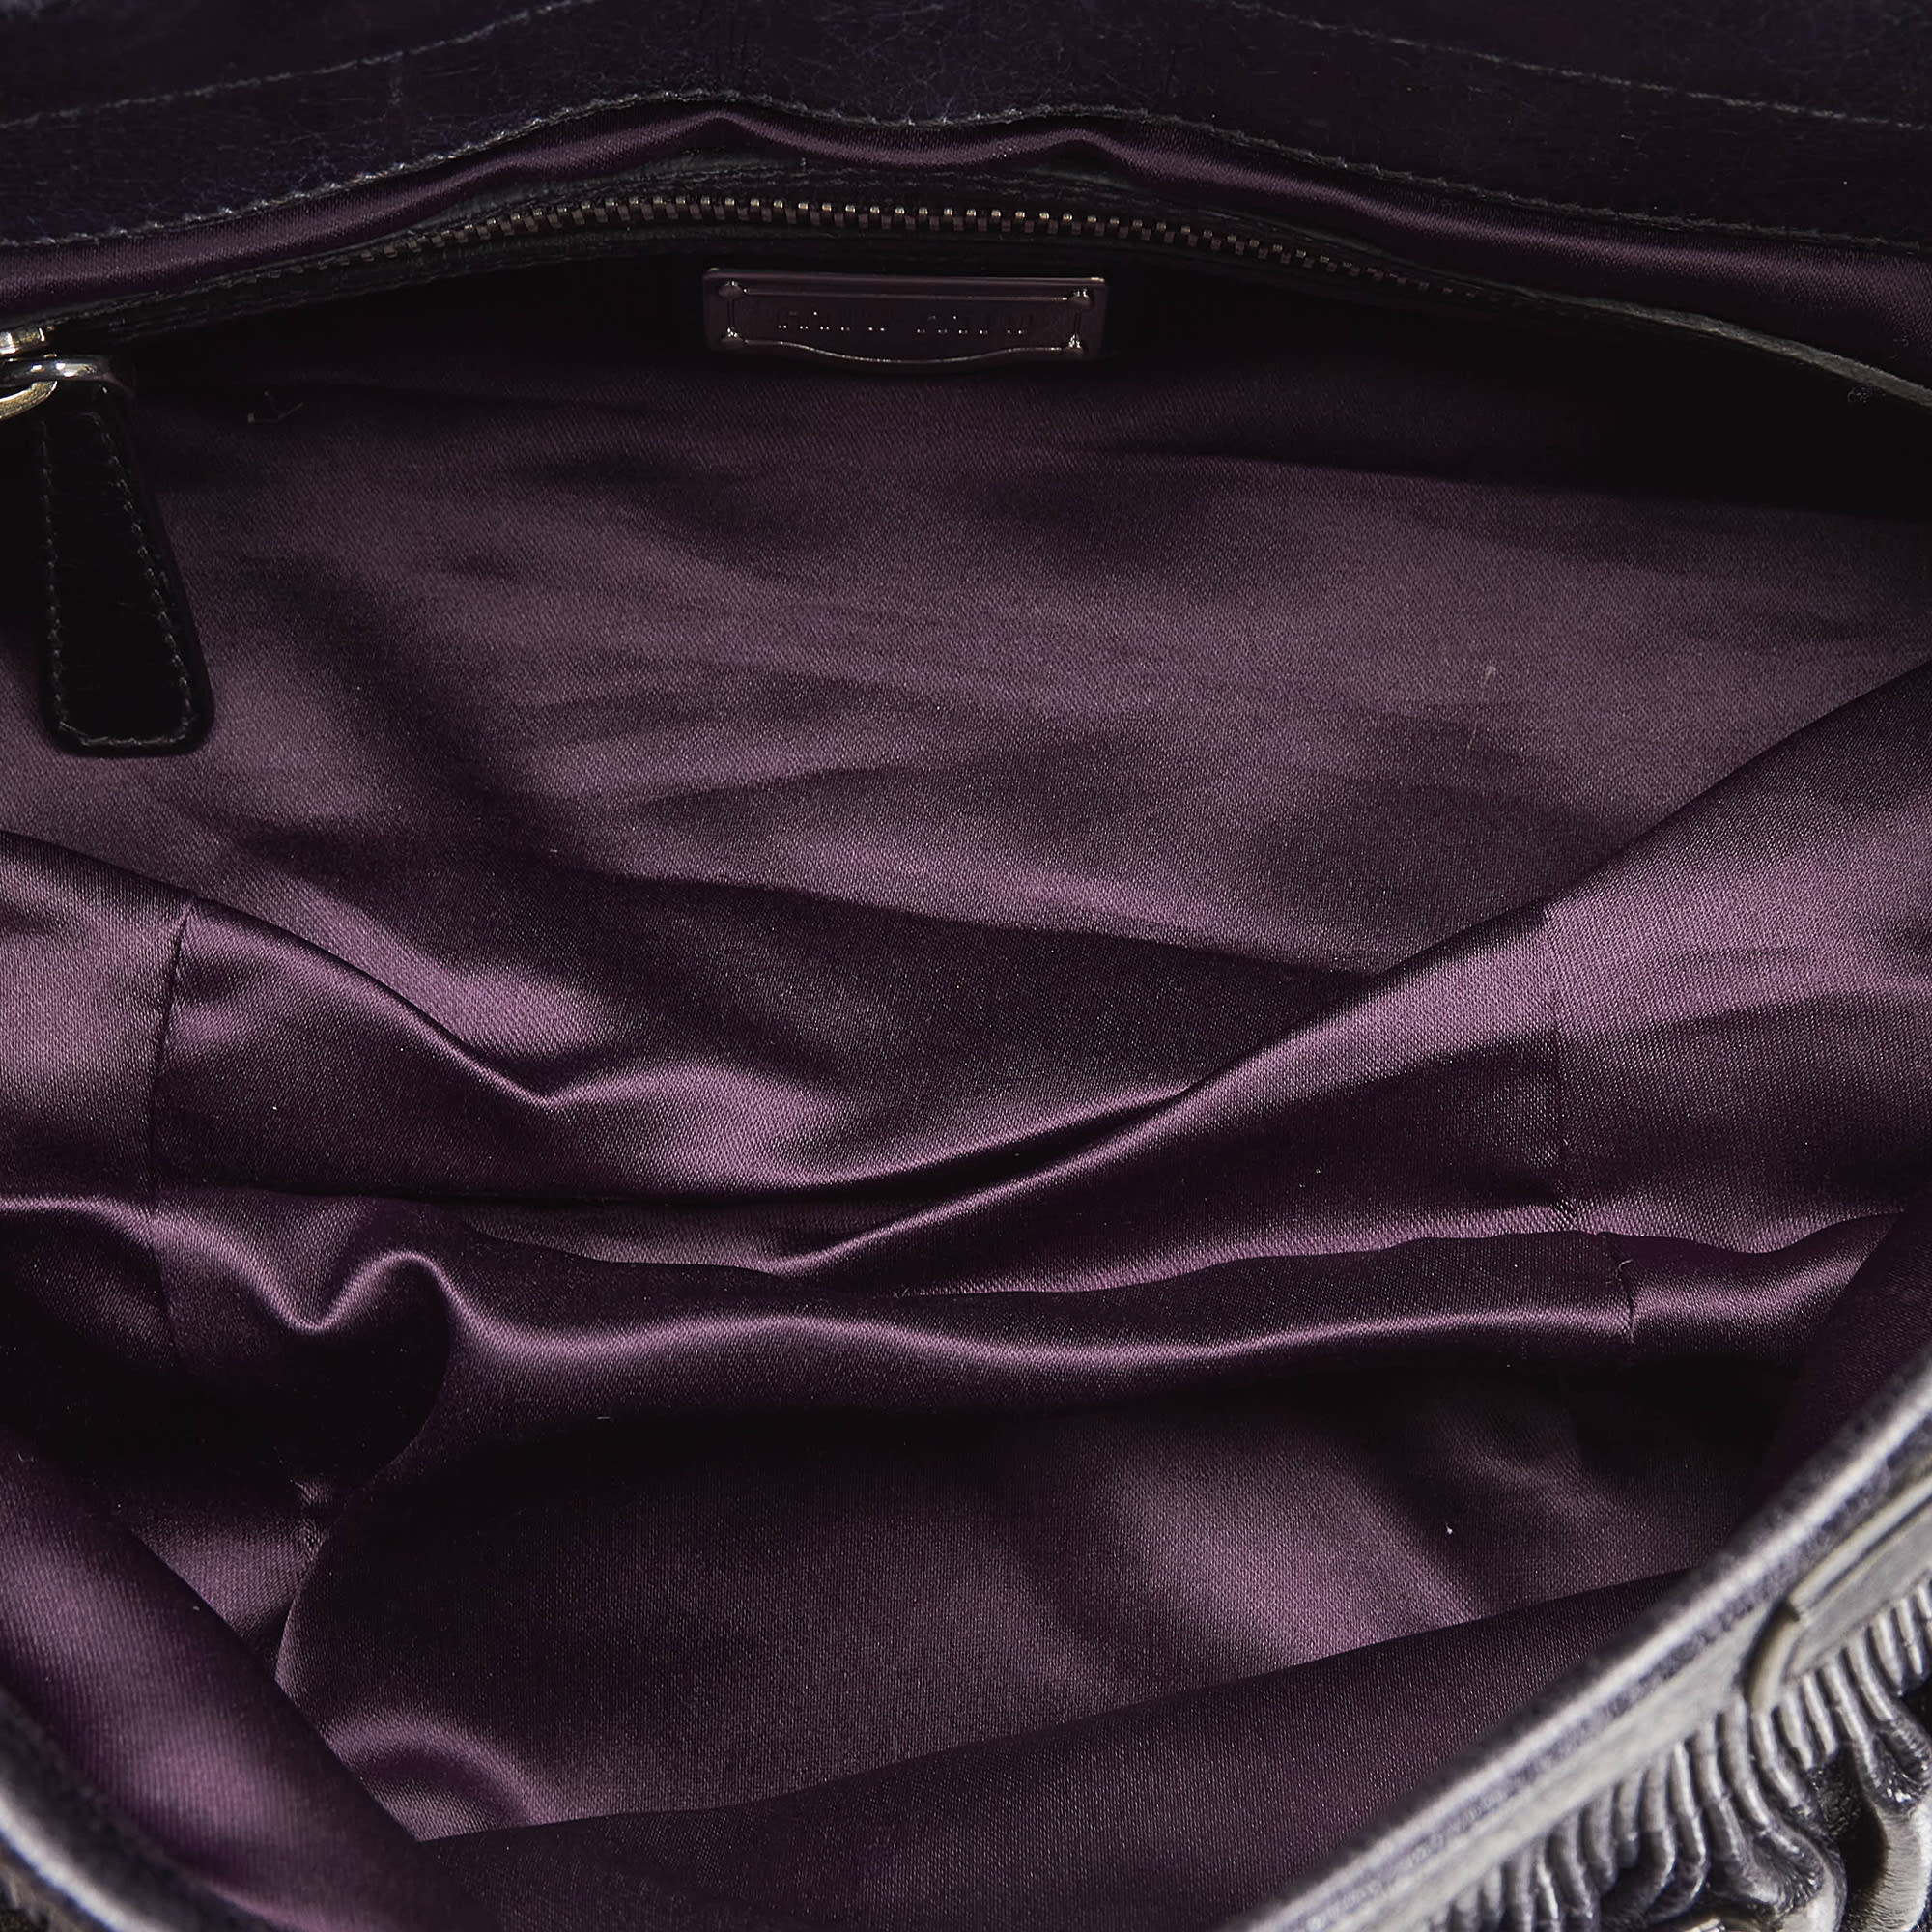 Miu Miu Leather Handbag, ONESIZE, black